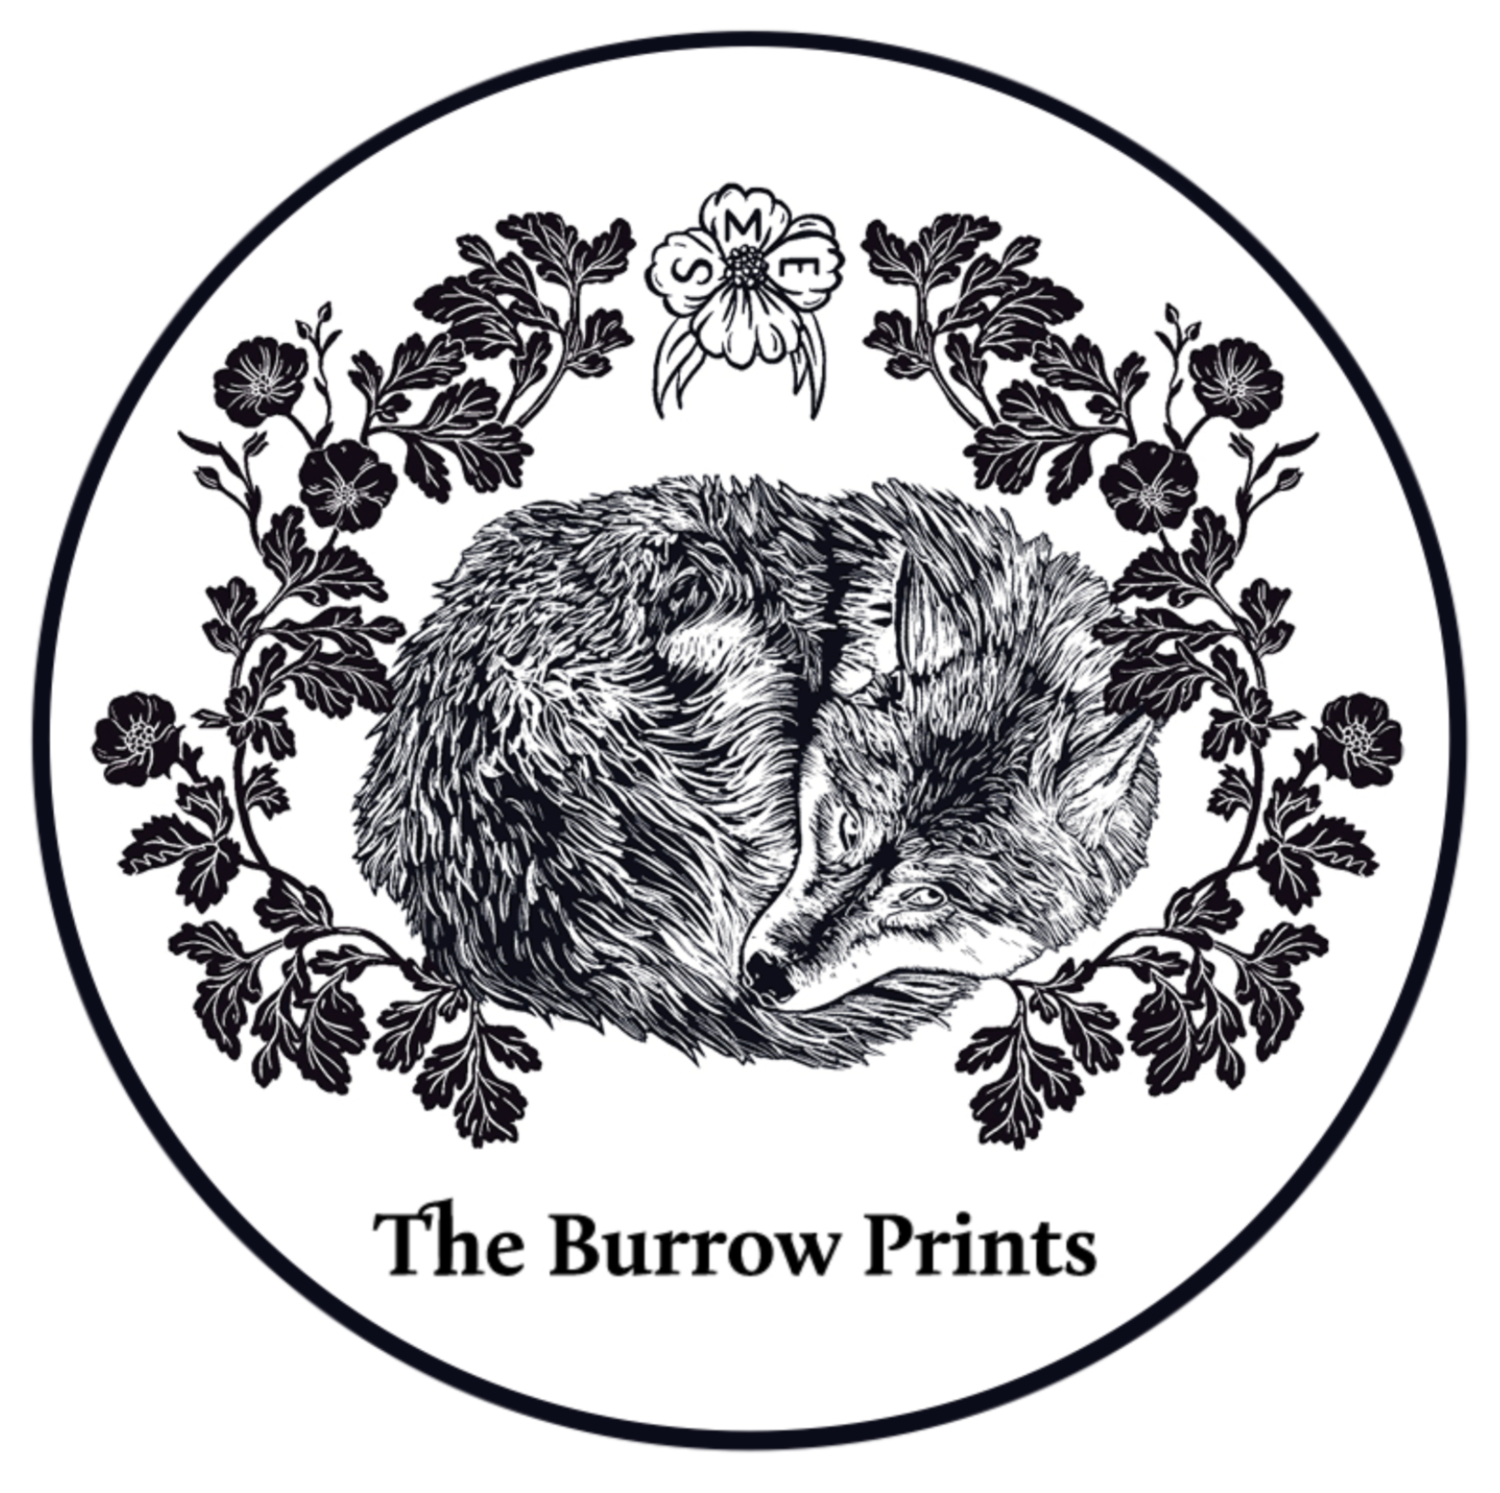 The Burrow Prints